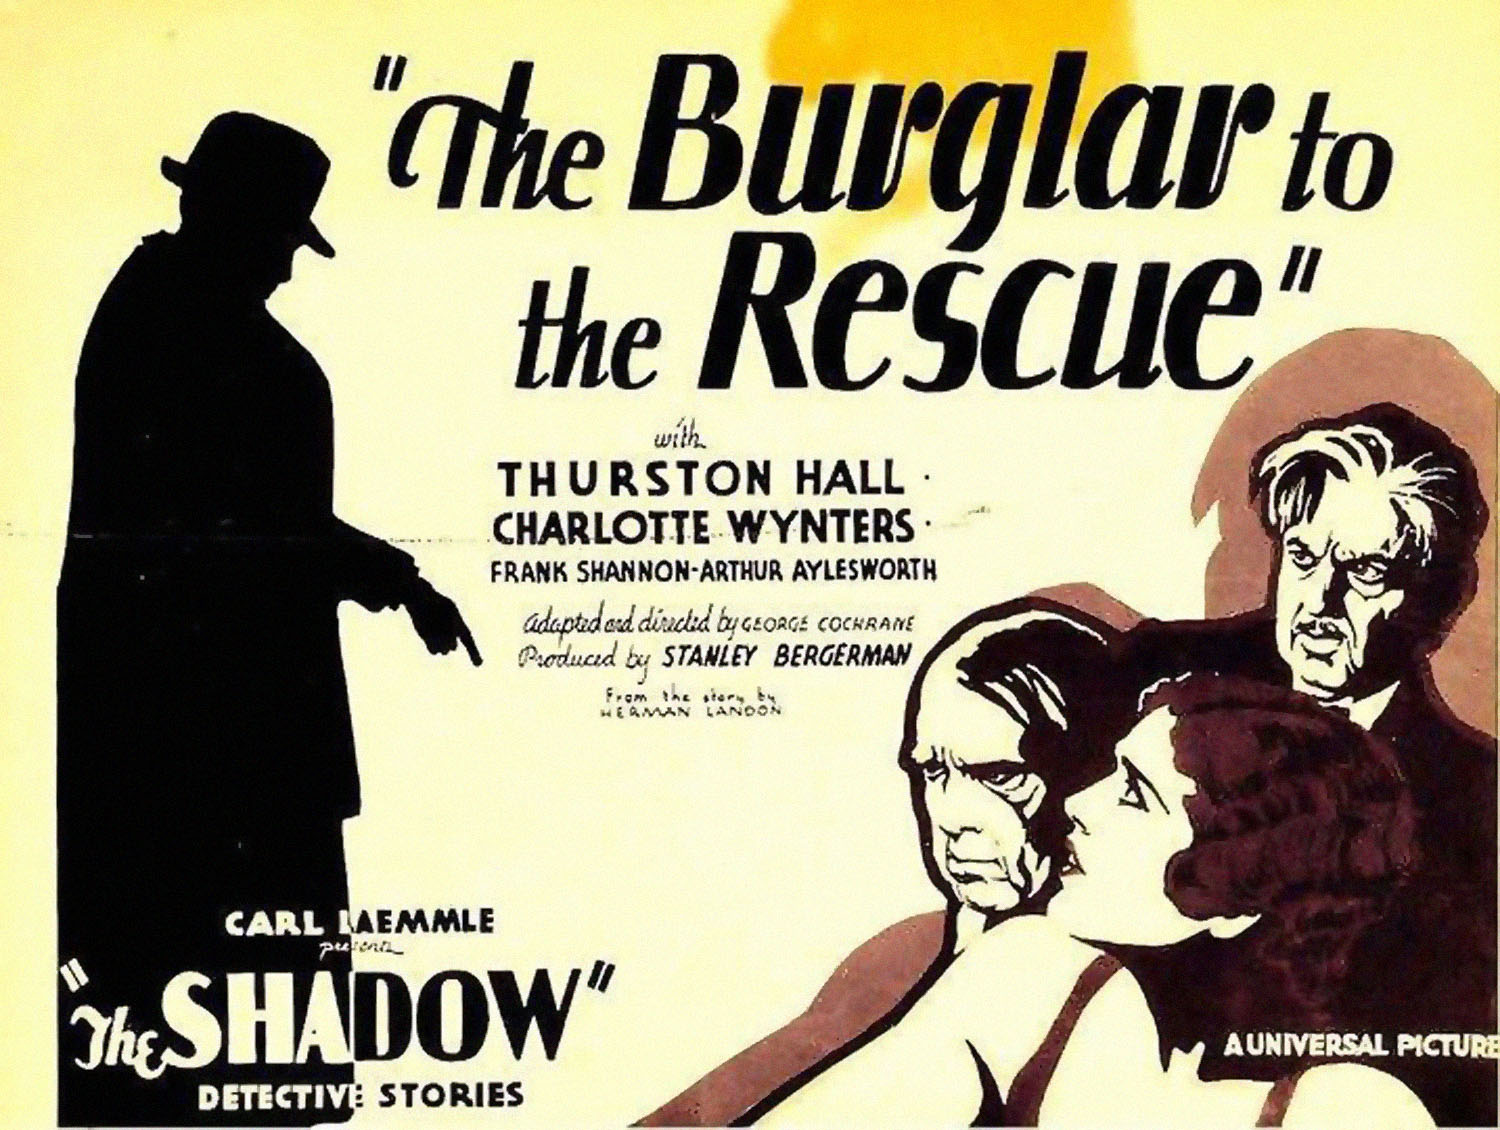 Shadow 1: A Burglar to the Rescue